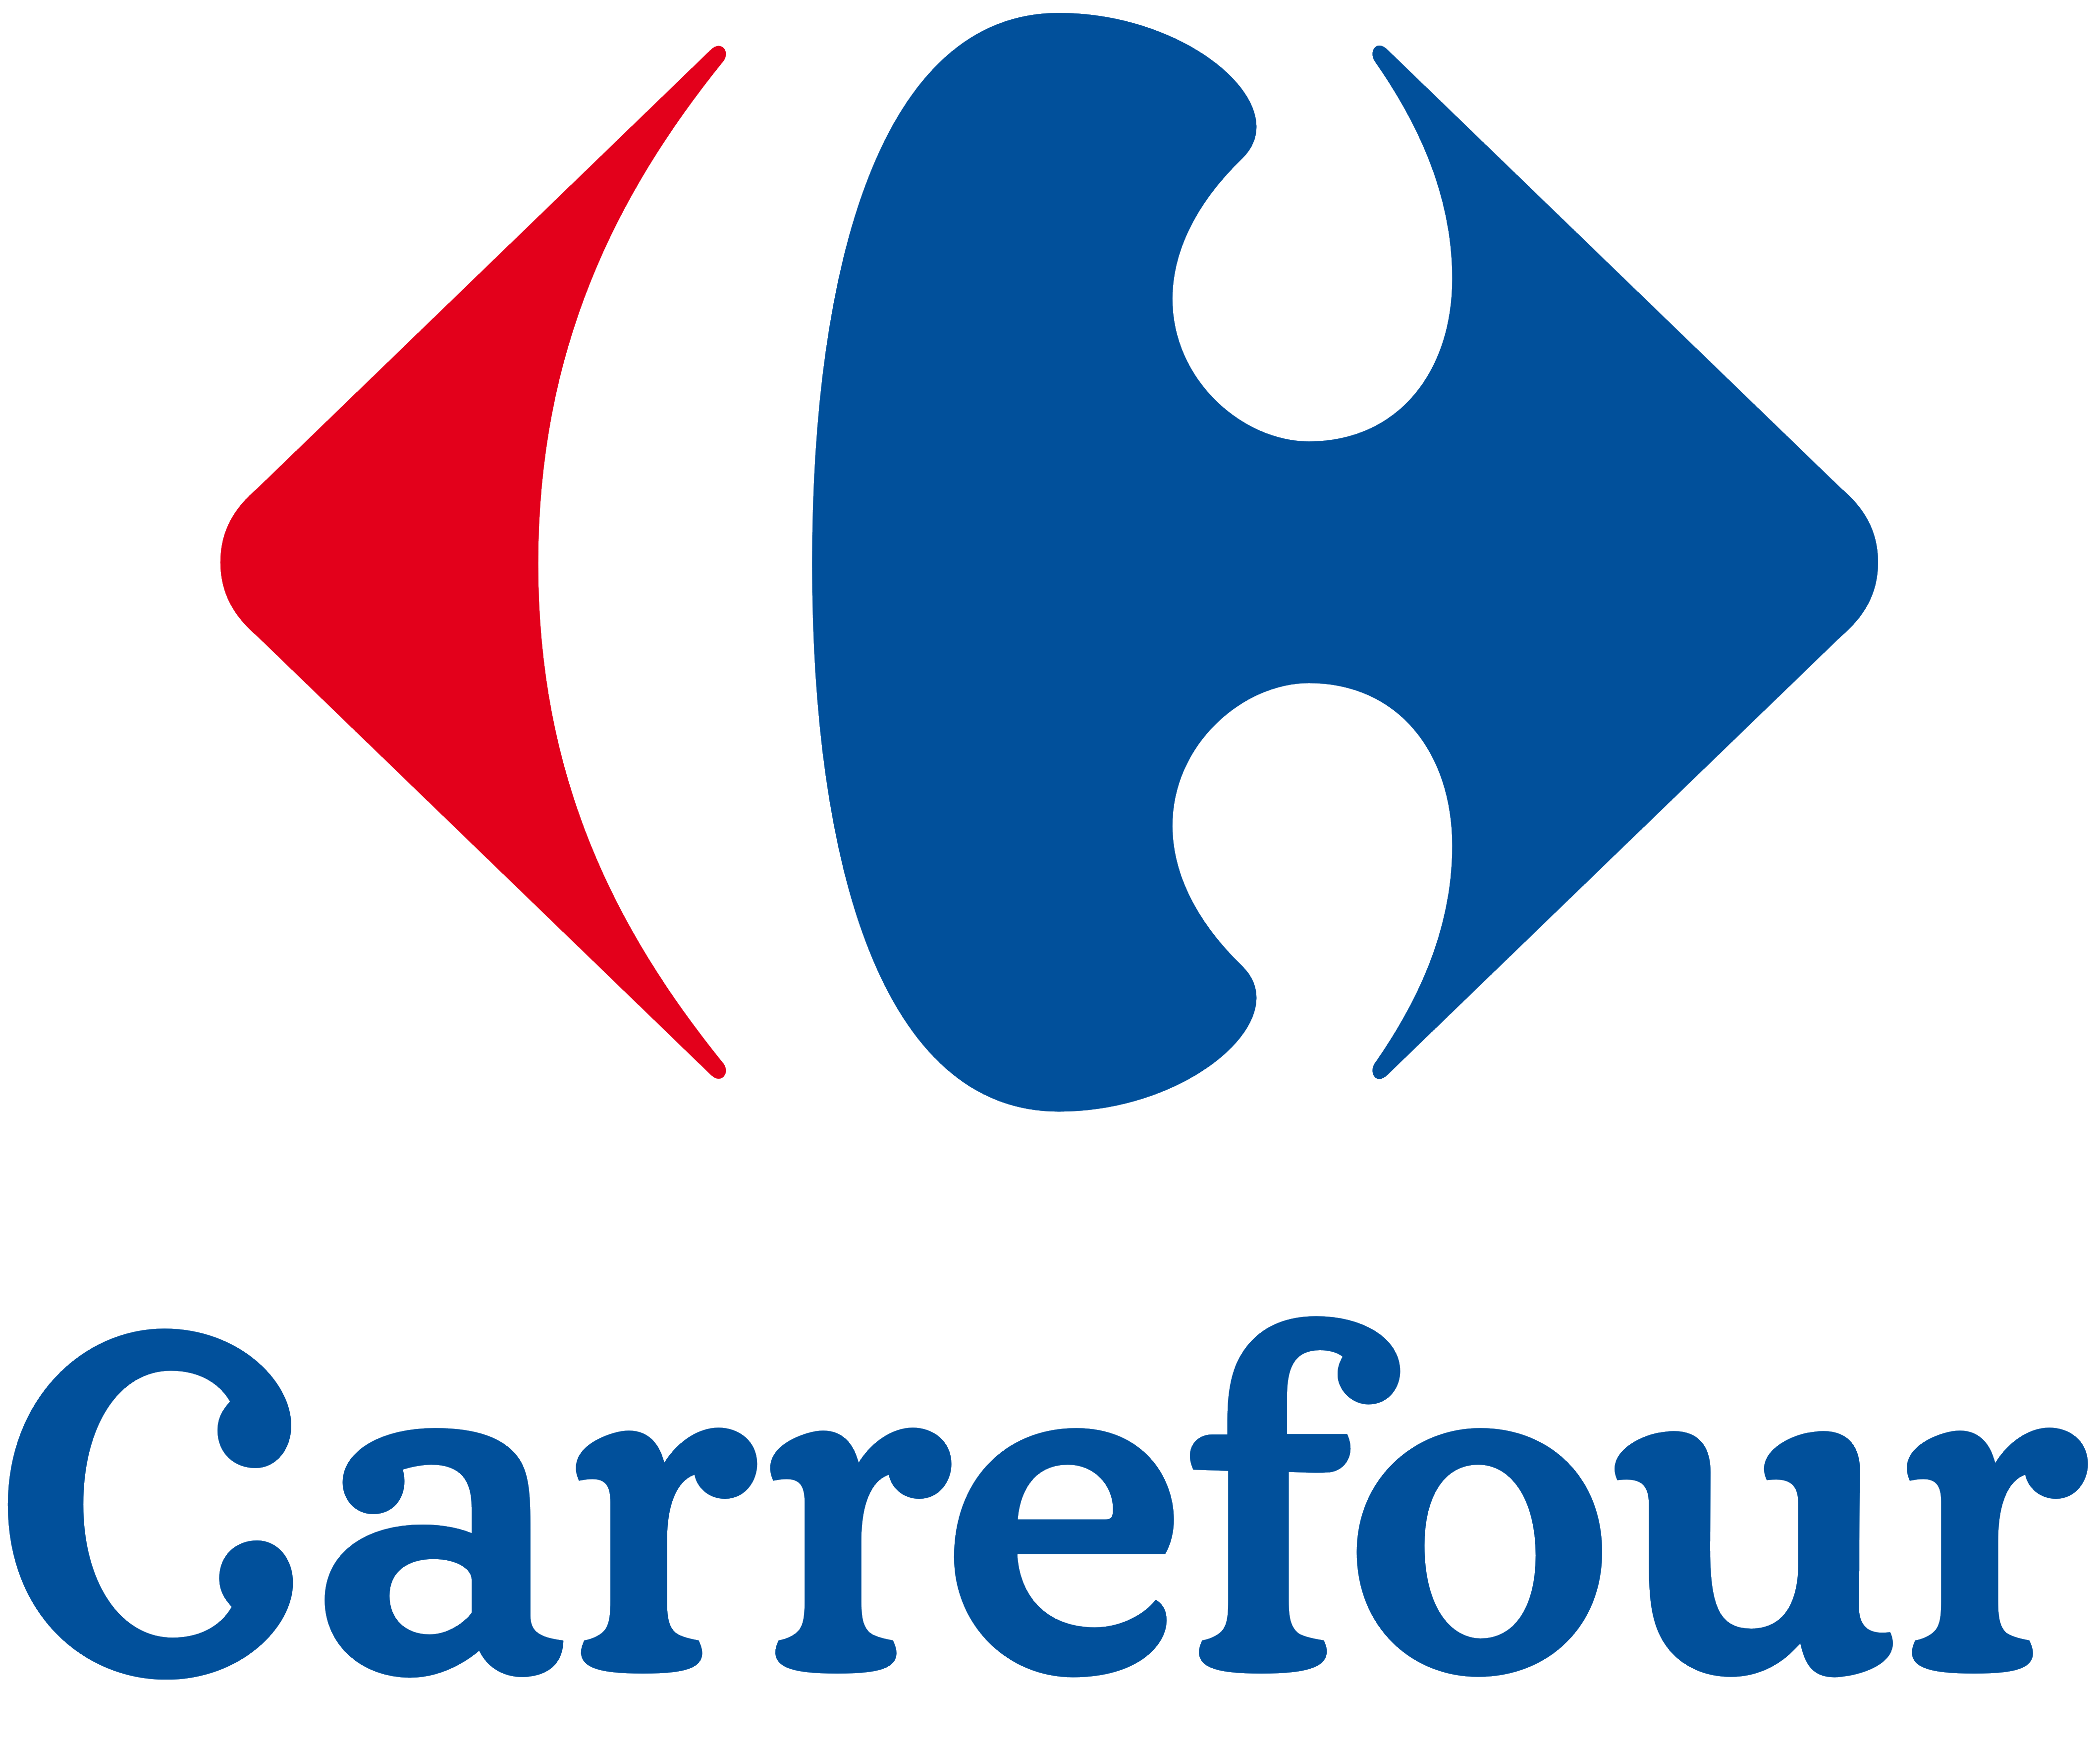 Carrefour logo, logotype